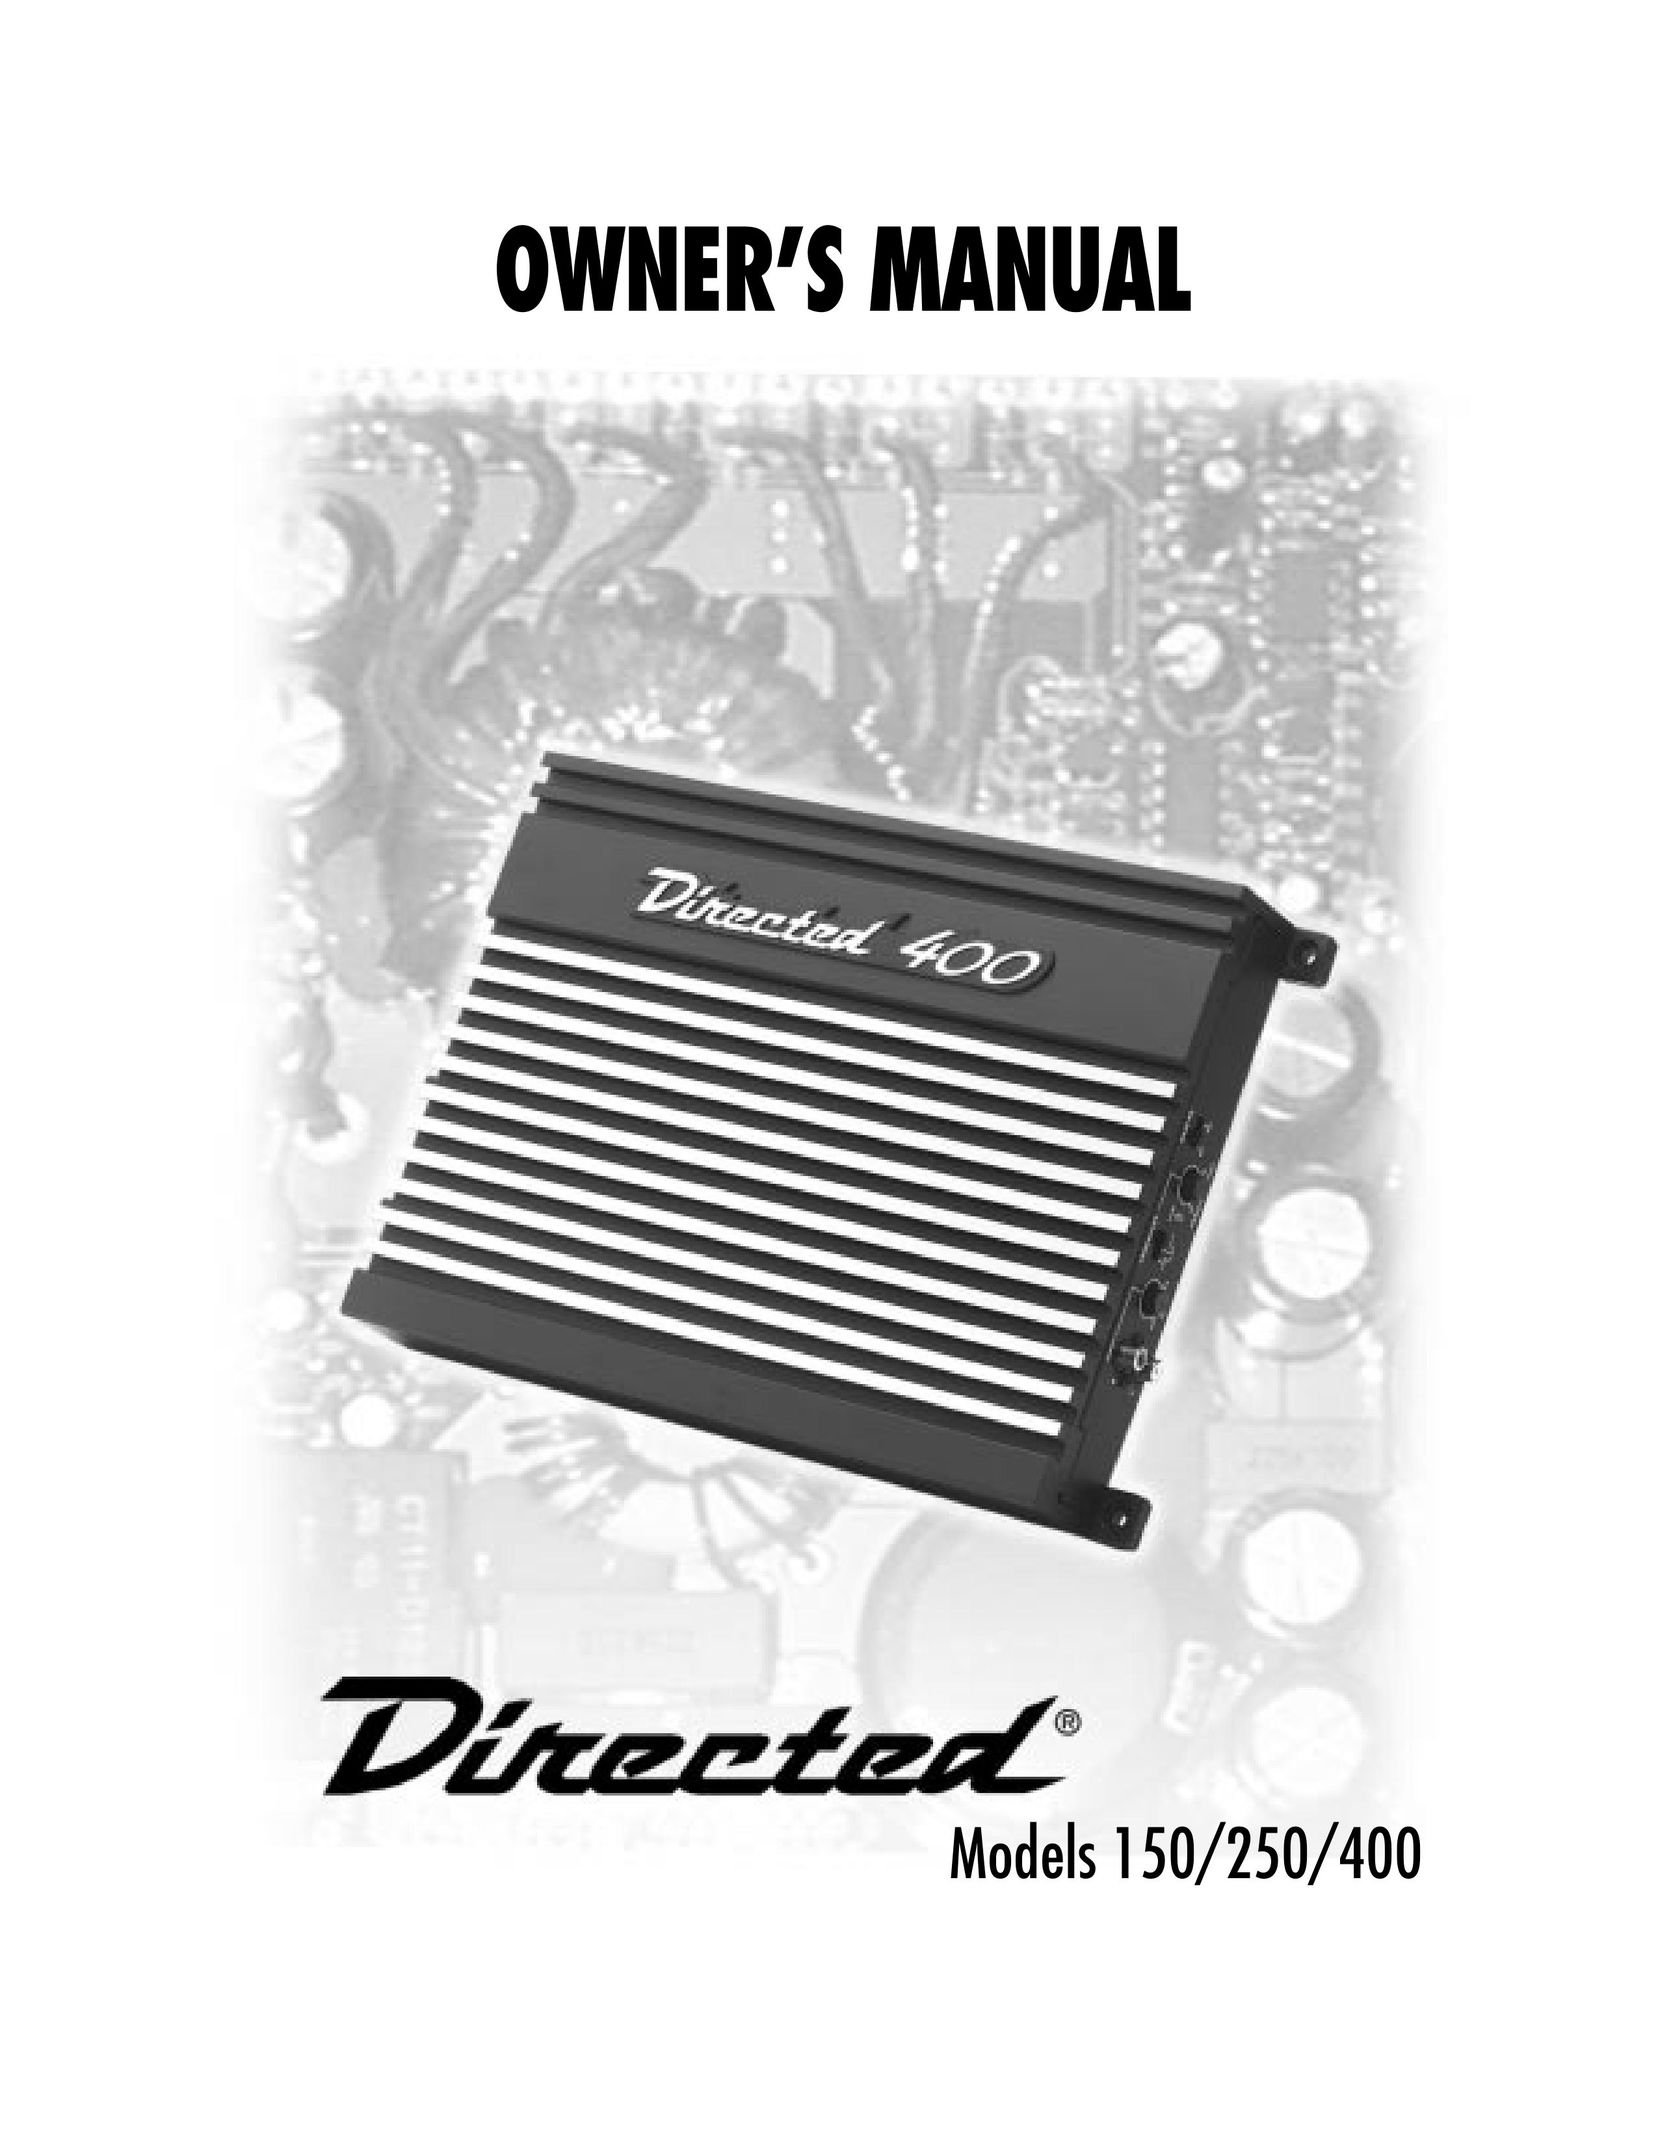 Directed Electronics 400 Car Amplifier User Manual